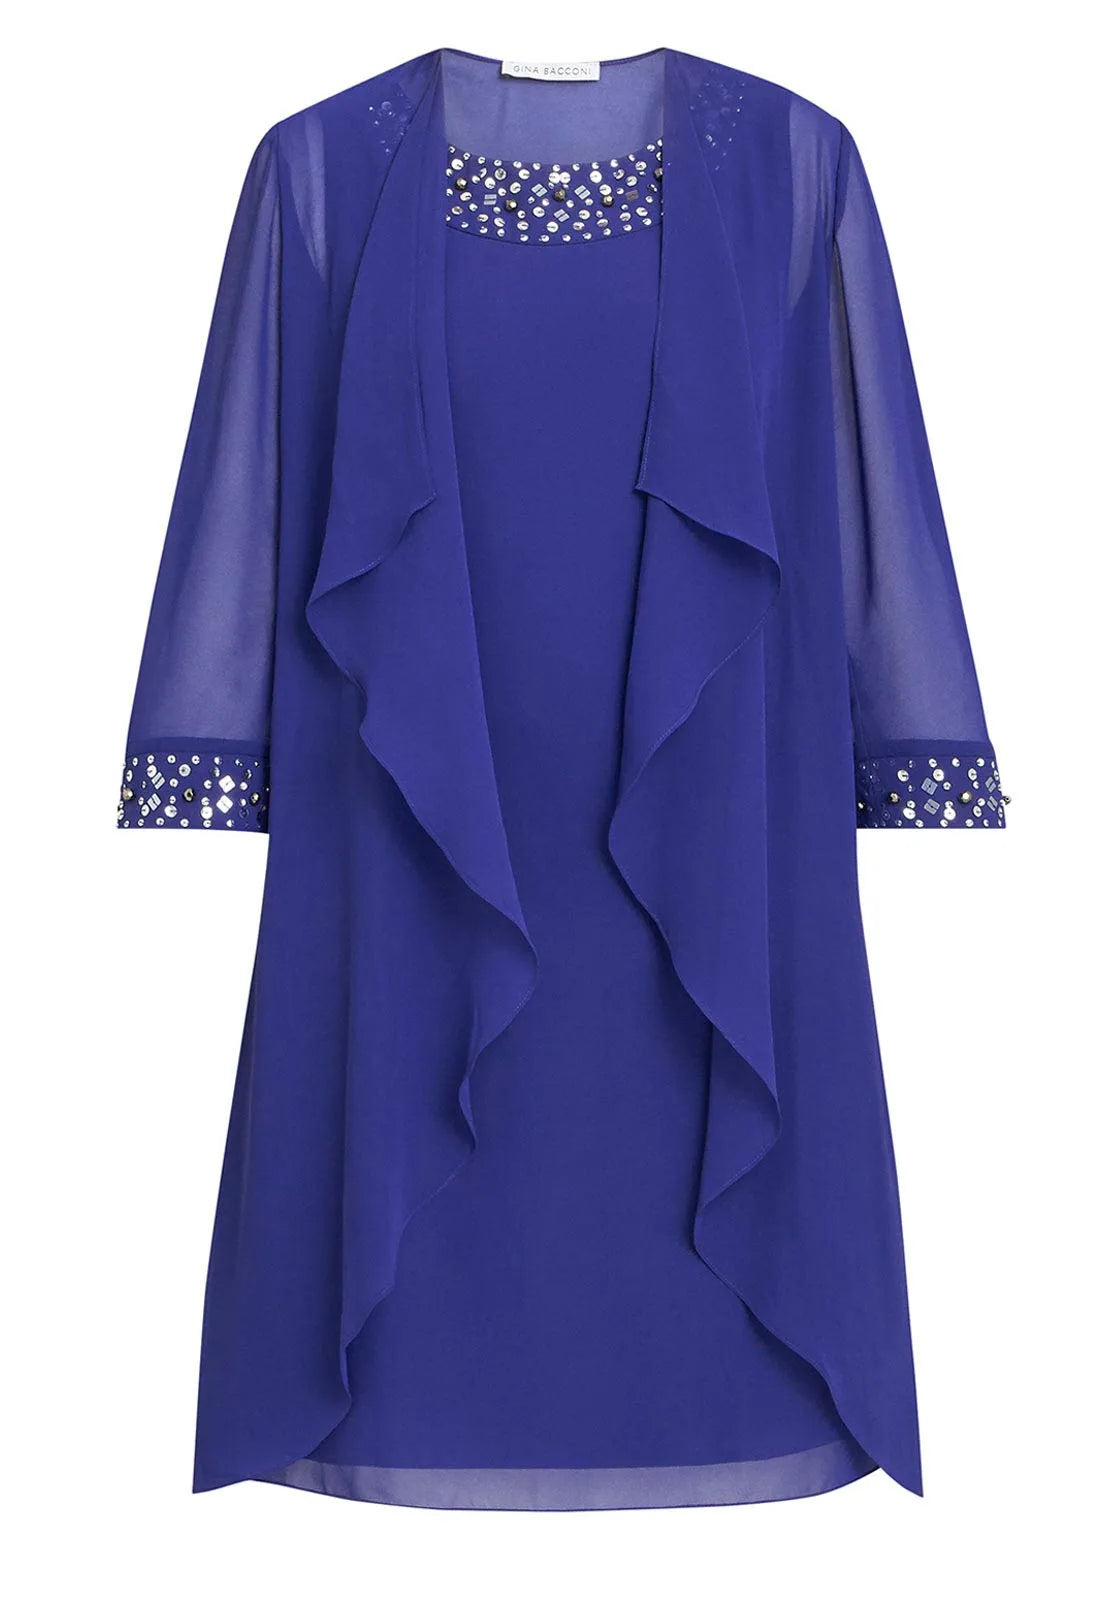 Gina Bacconi Blue Joseline Jacket Dress With Beaded Neckline